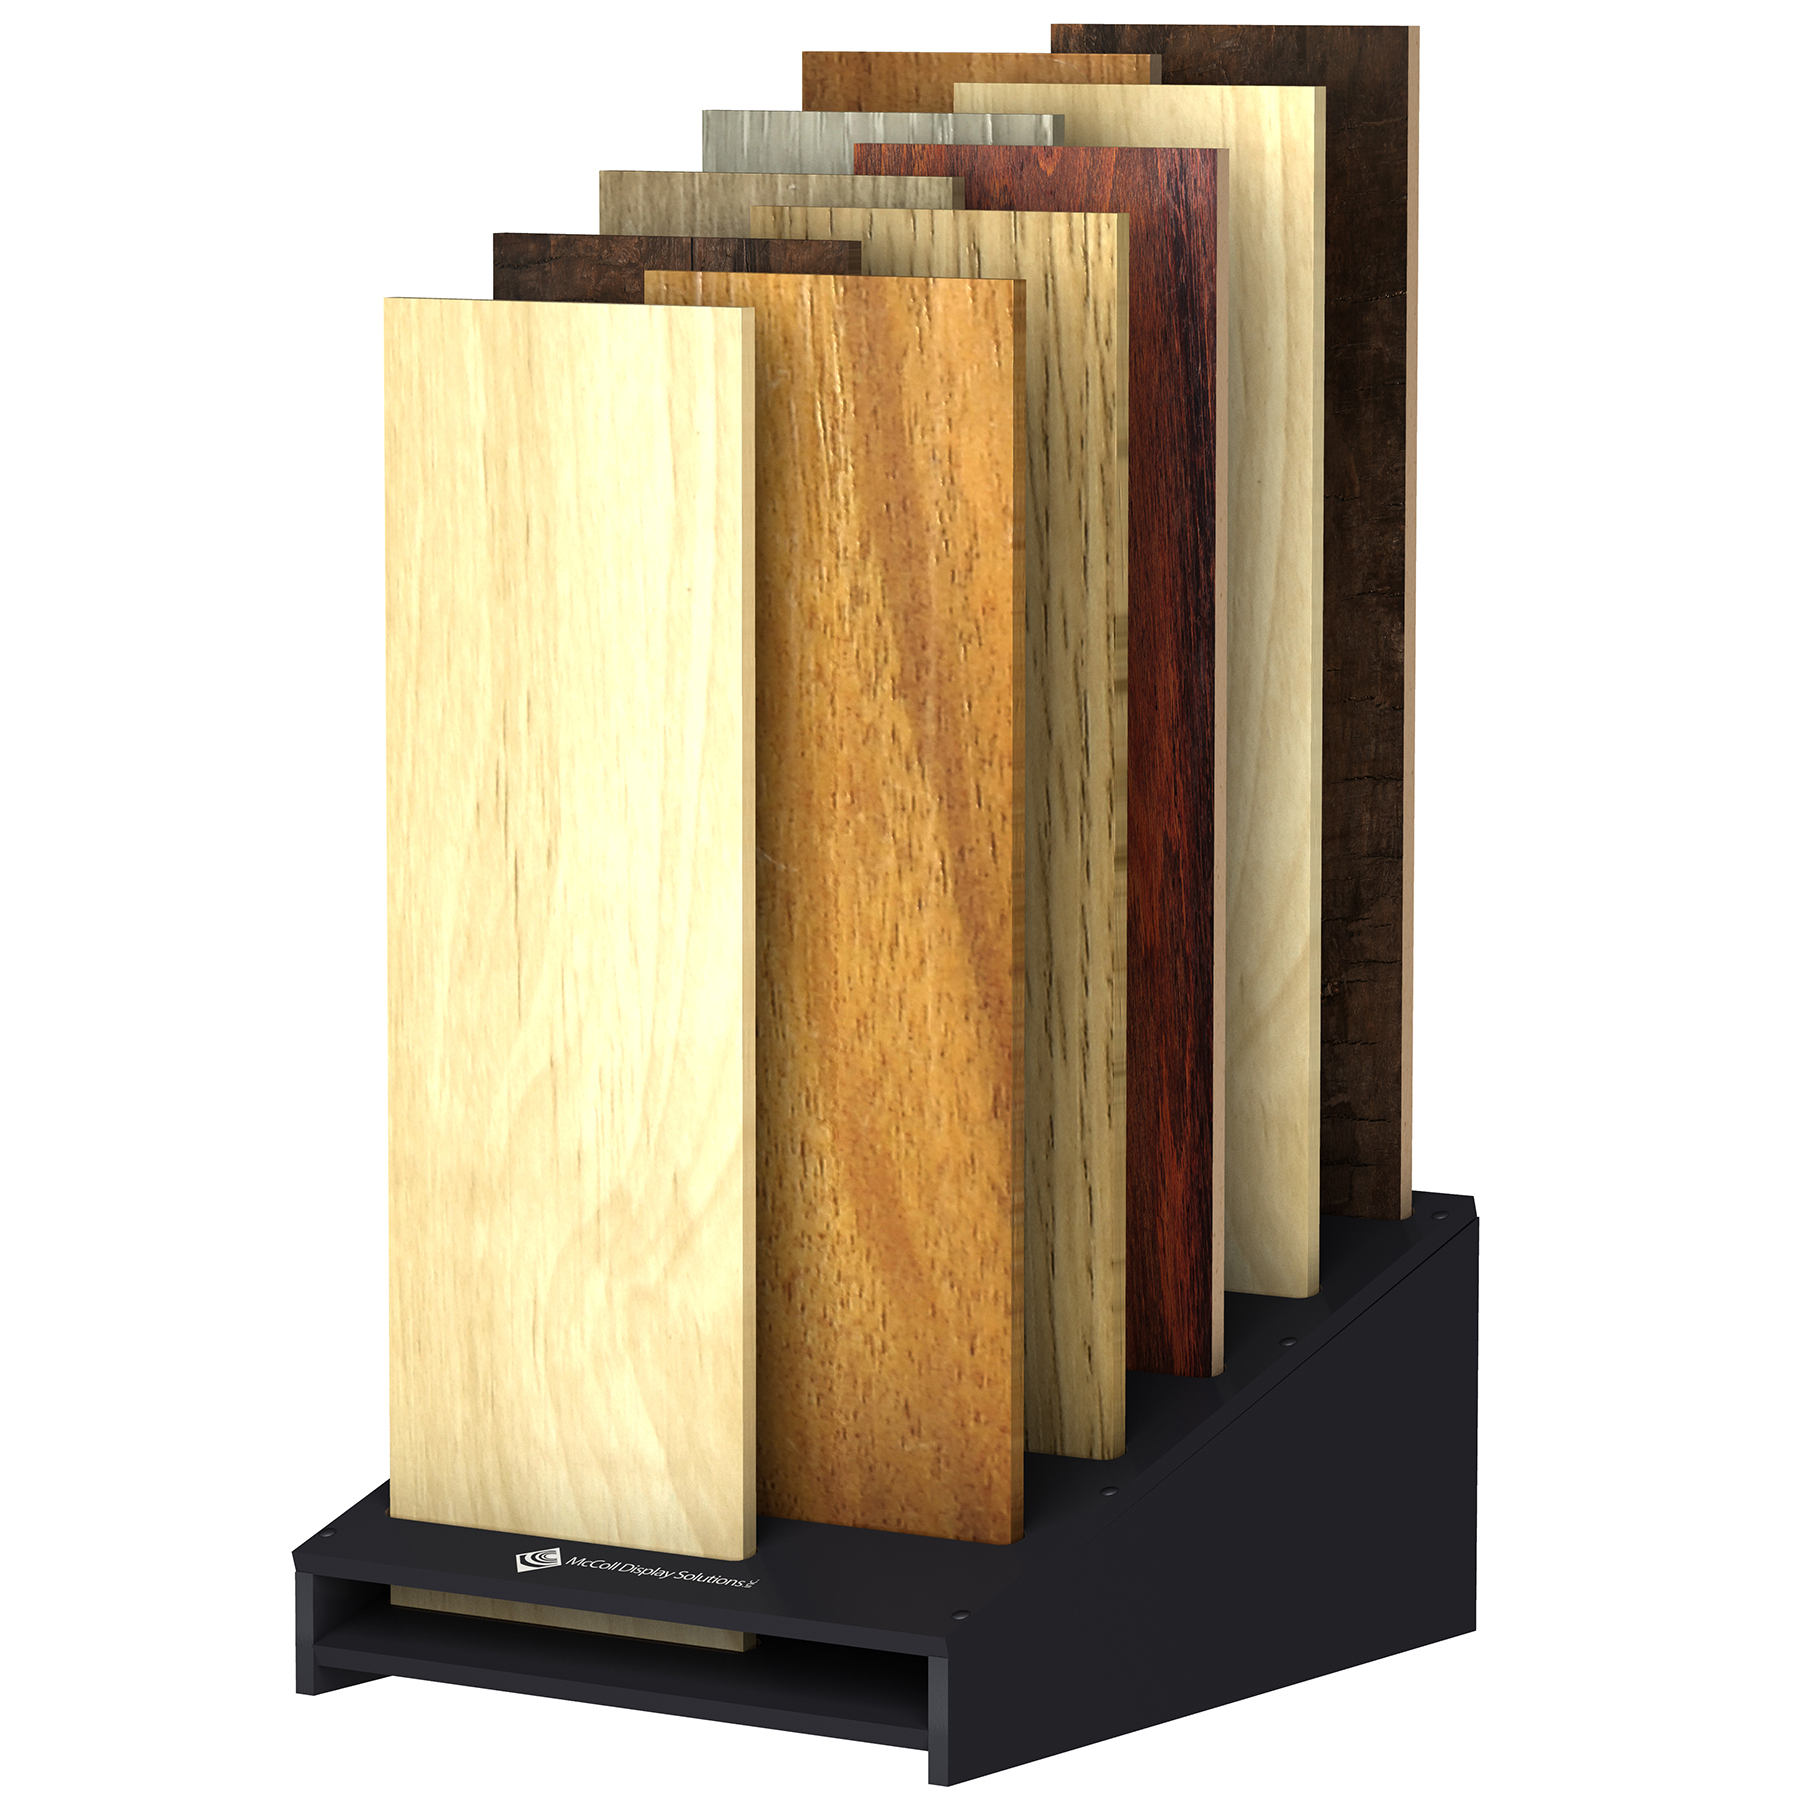 CD23 Wood Laminate Plank Floor Tile Flooring Customize Showroom Displays Low Cost McColl Display